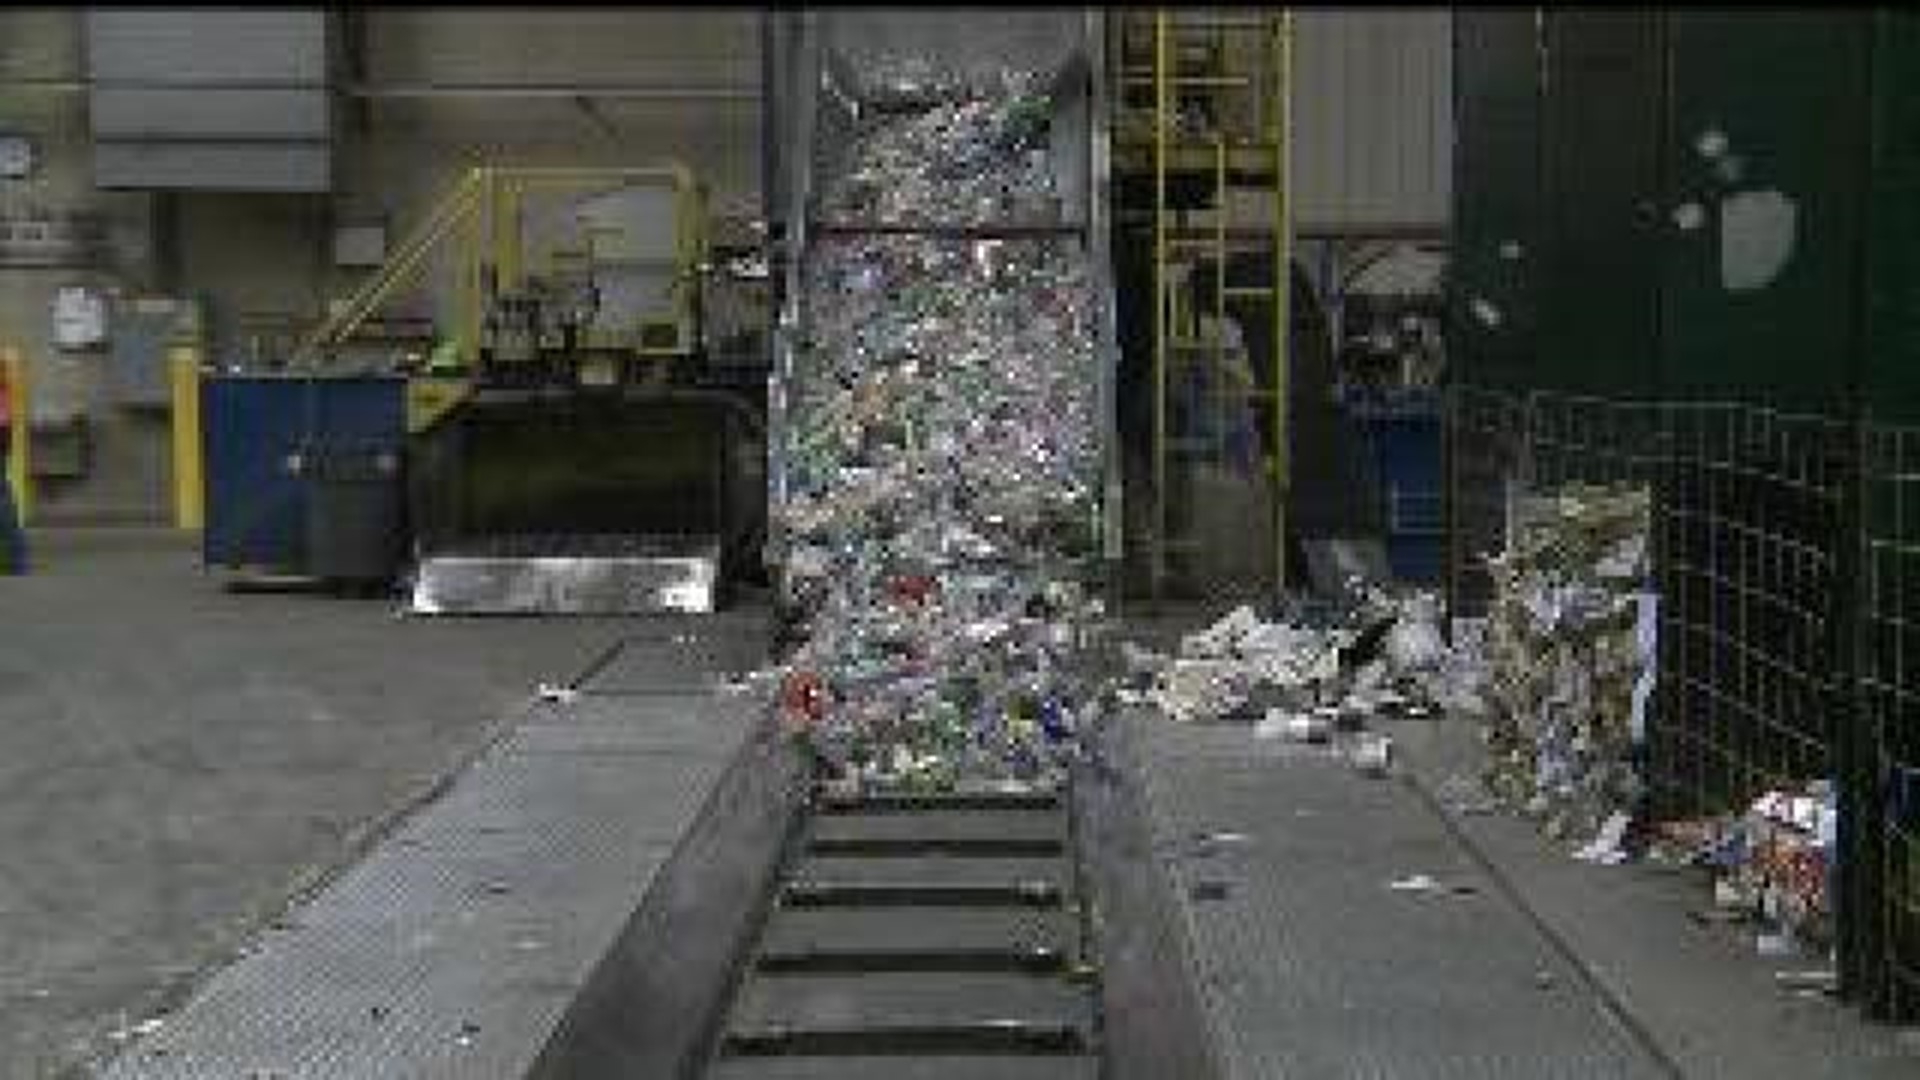 Davenport recycling facilities